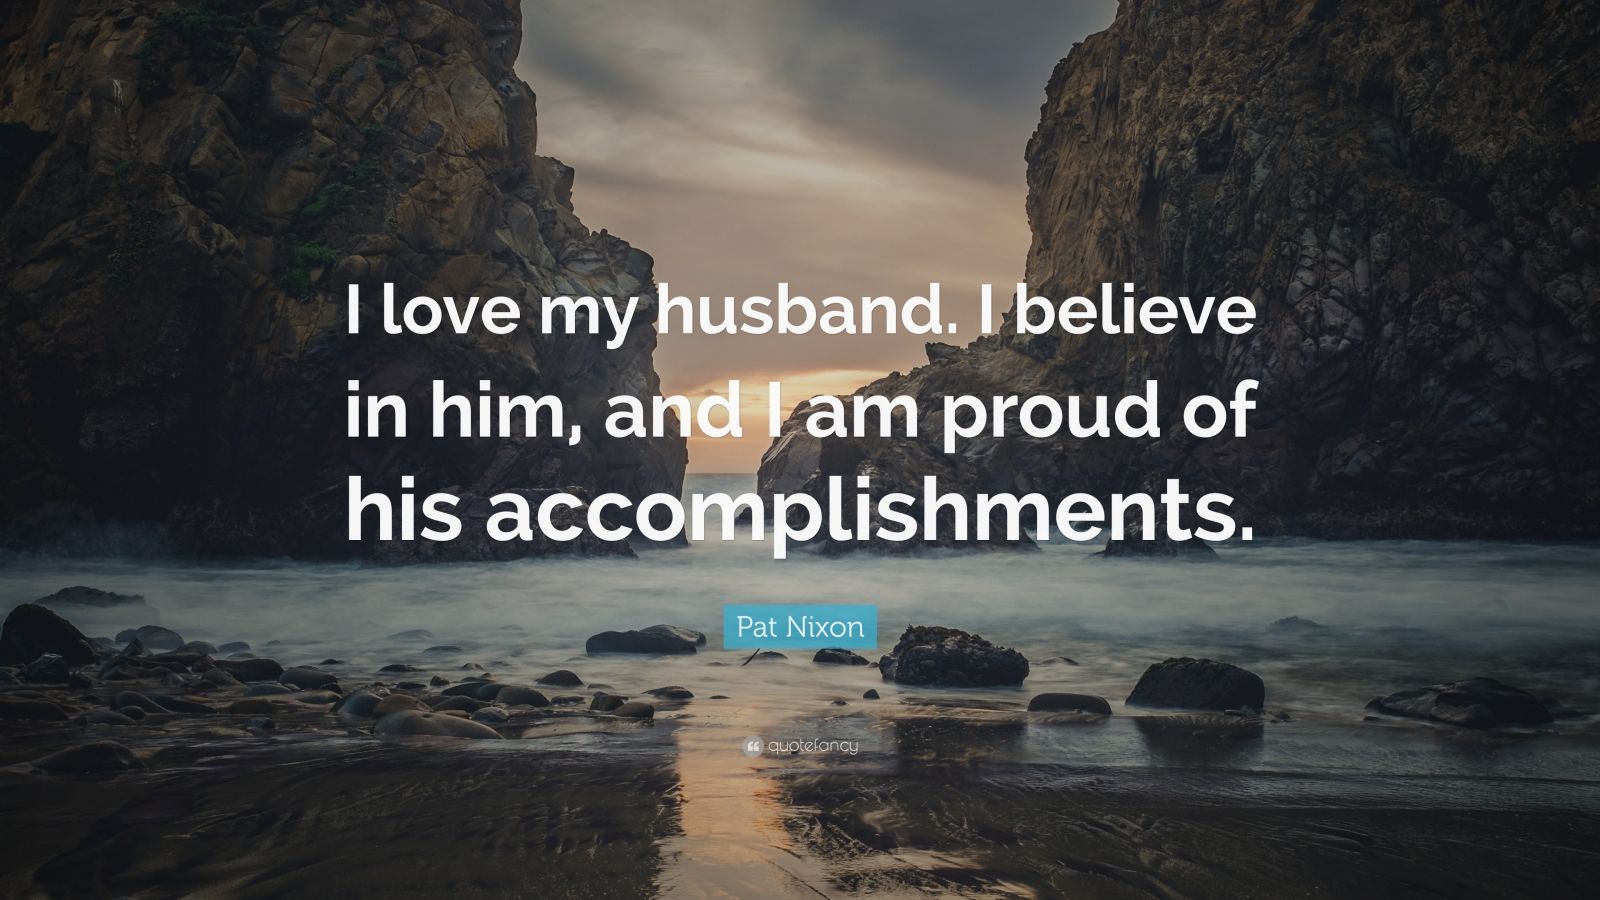 Pat Nixon Quote: "I love my husband. I believe in him, and ...